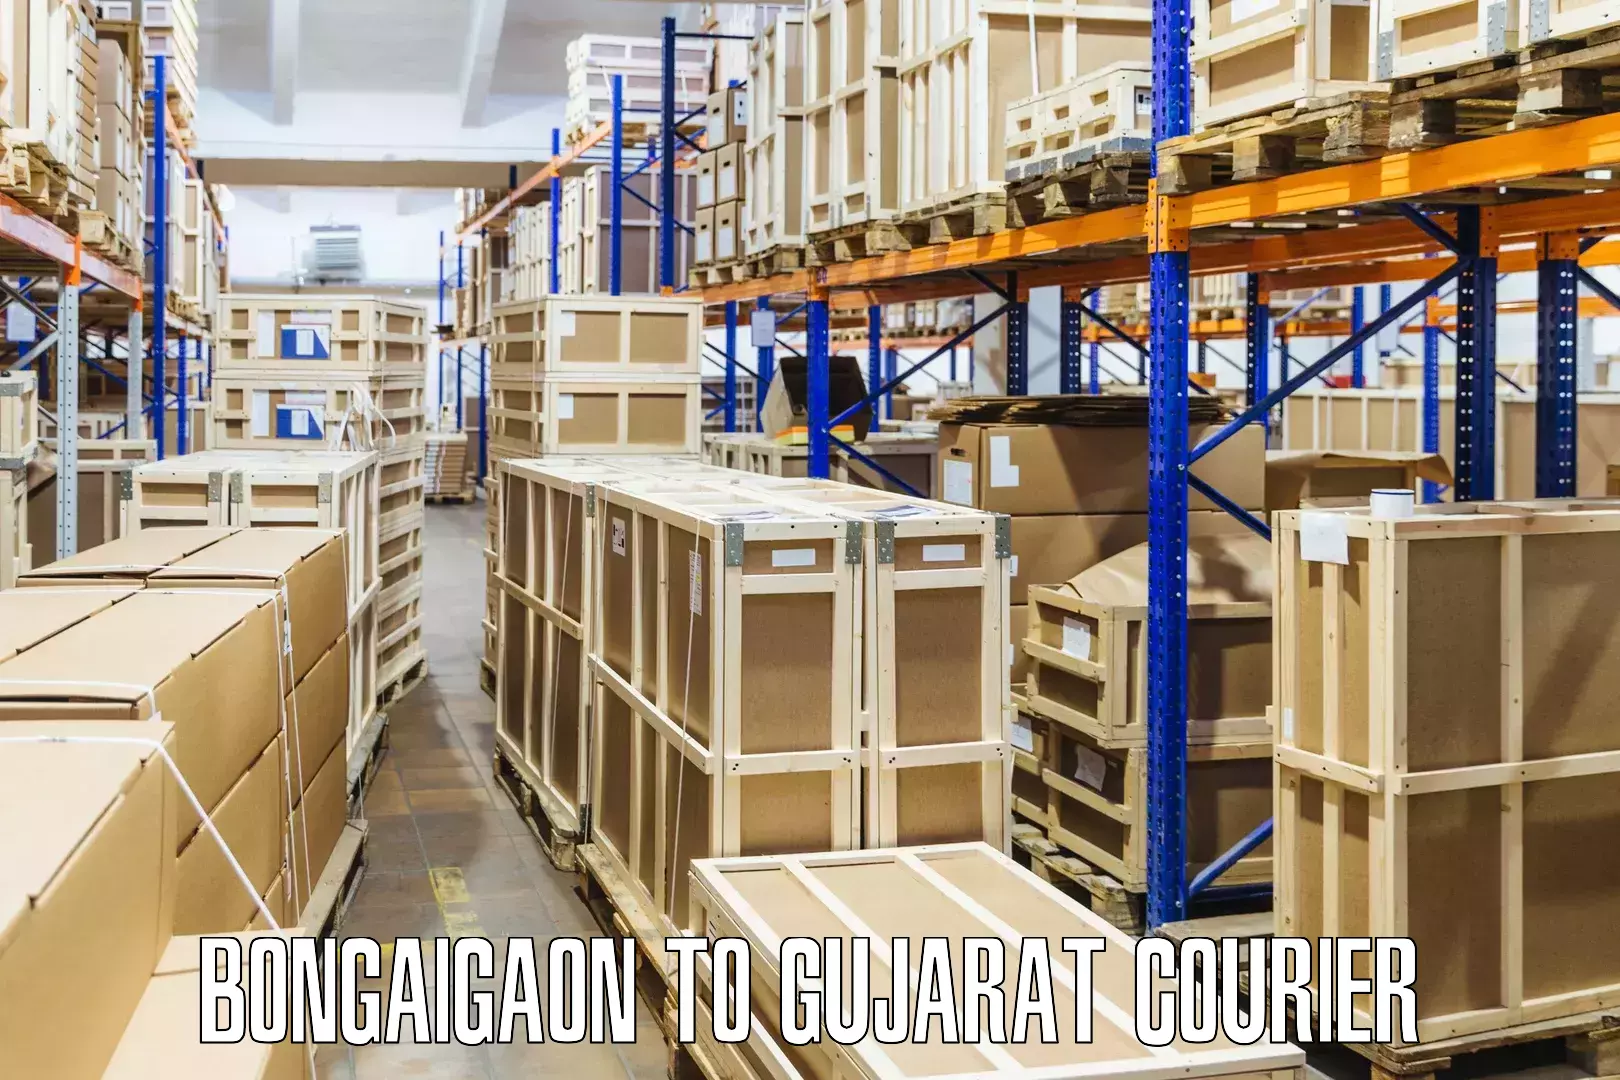 High-priority parcel service Bongaigaon to Patan Gujarat